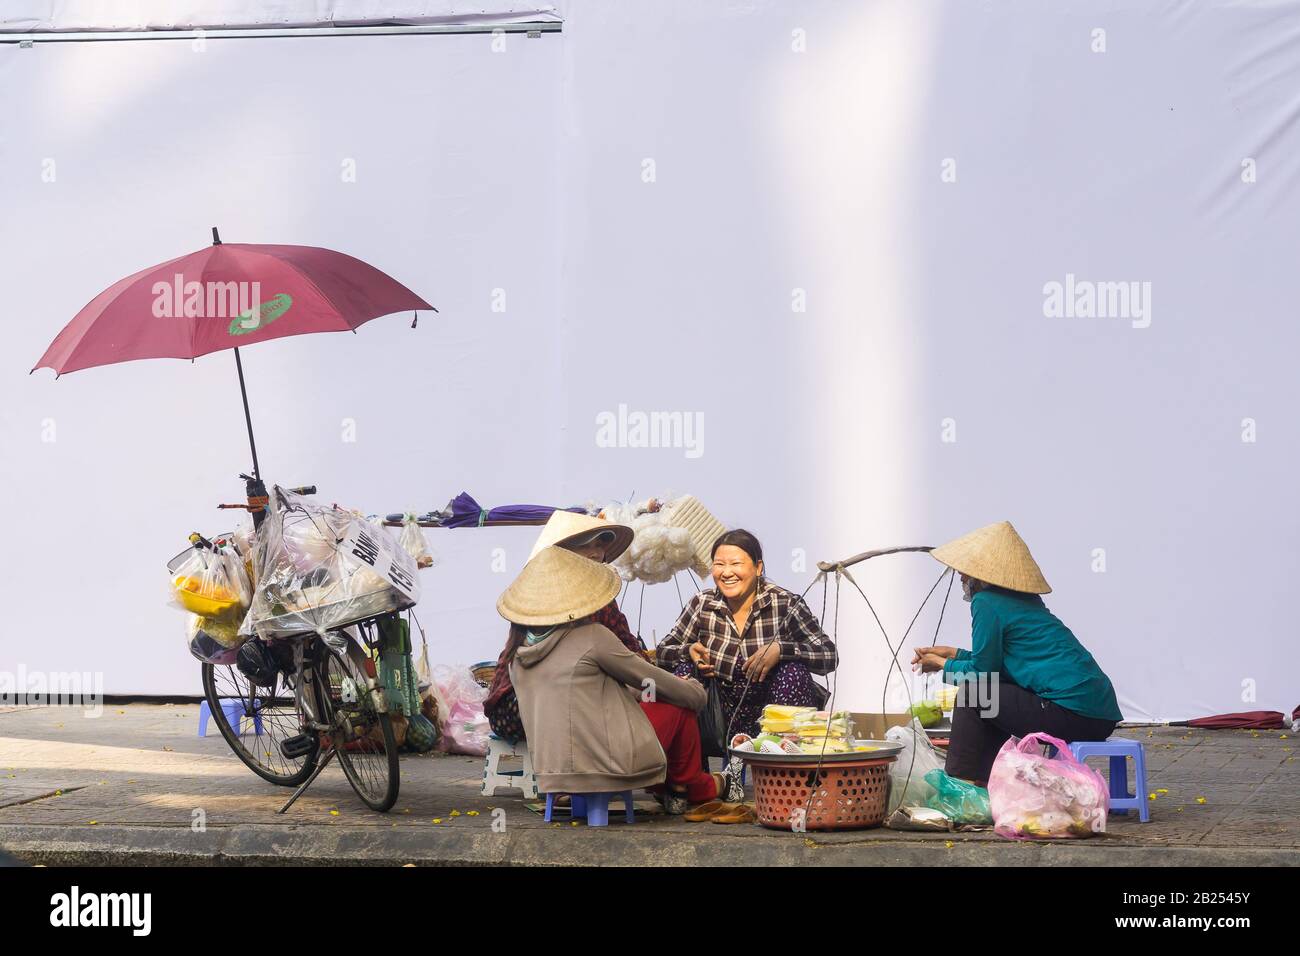 Saigon (Ho Chi Minh City) - Group of Vietnamese women selling fresh produce, chatting on the street of Saigon, Vietnam, Southeast Asia. Stock Photo